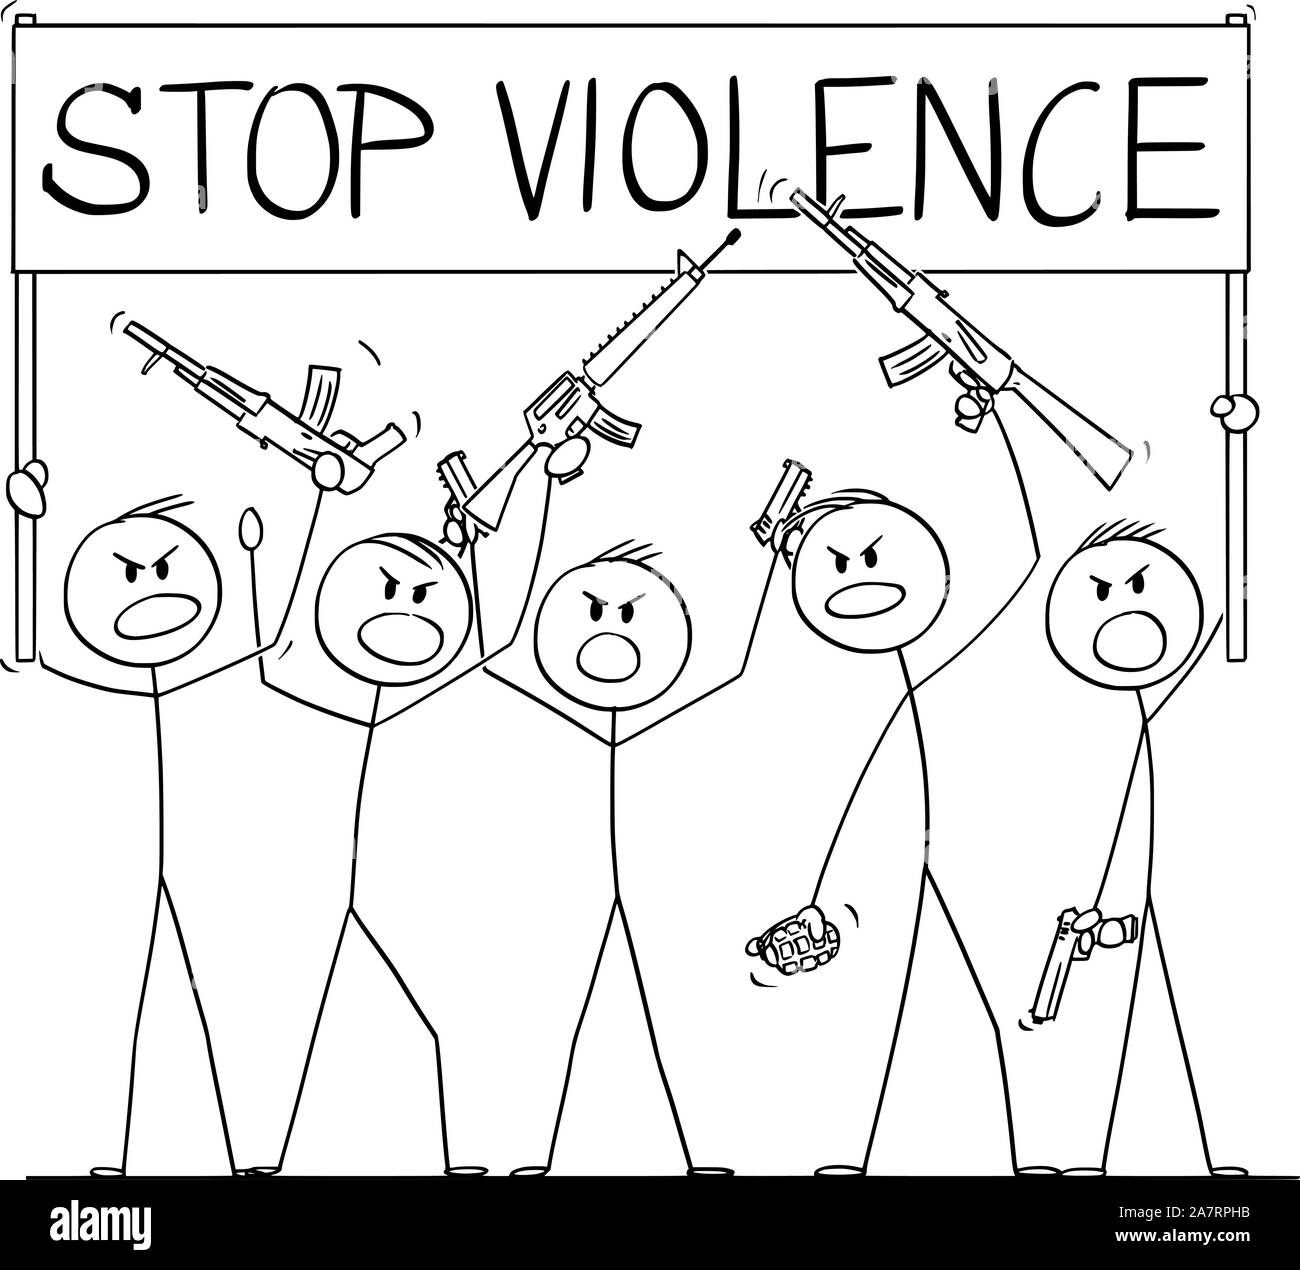 Stick Figure Violence